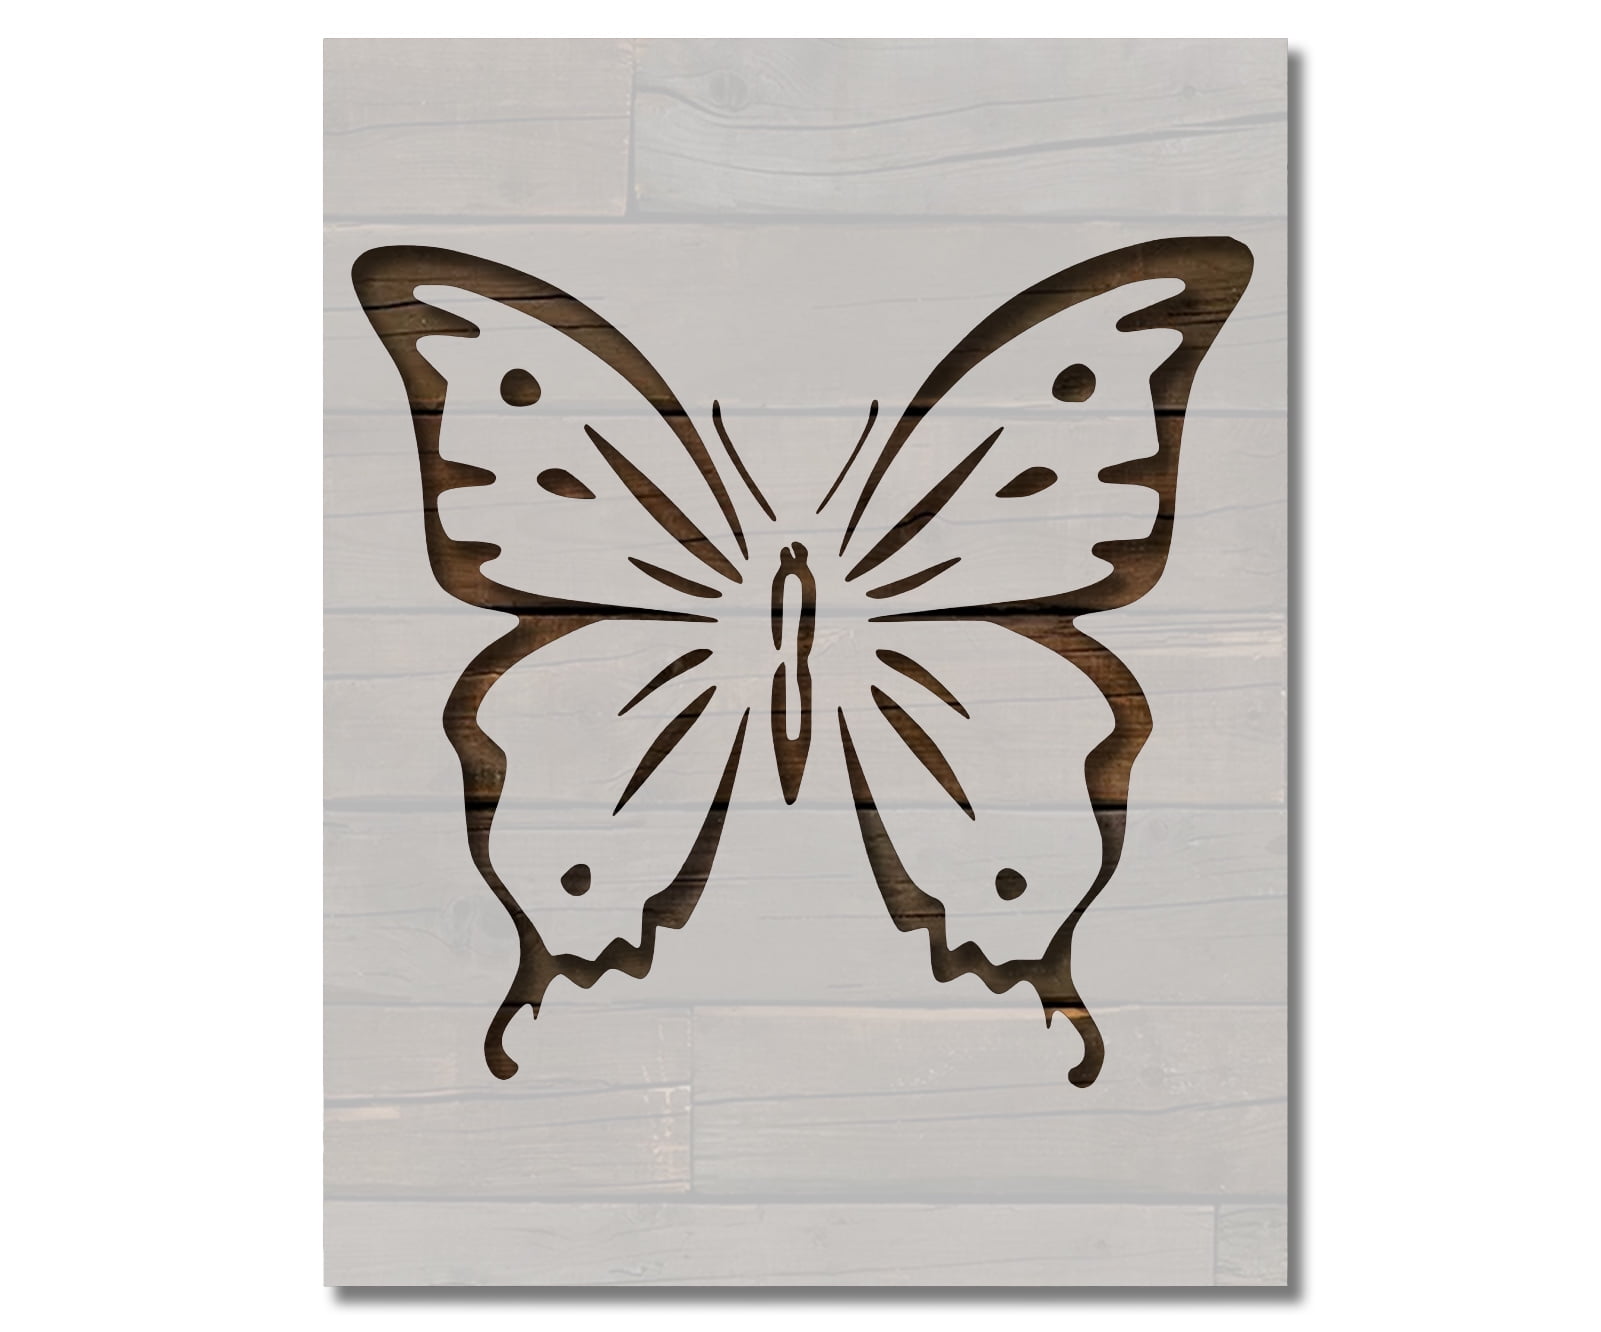 Stencil1 11x11 Stencil - Butterflies